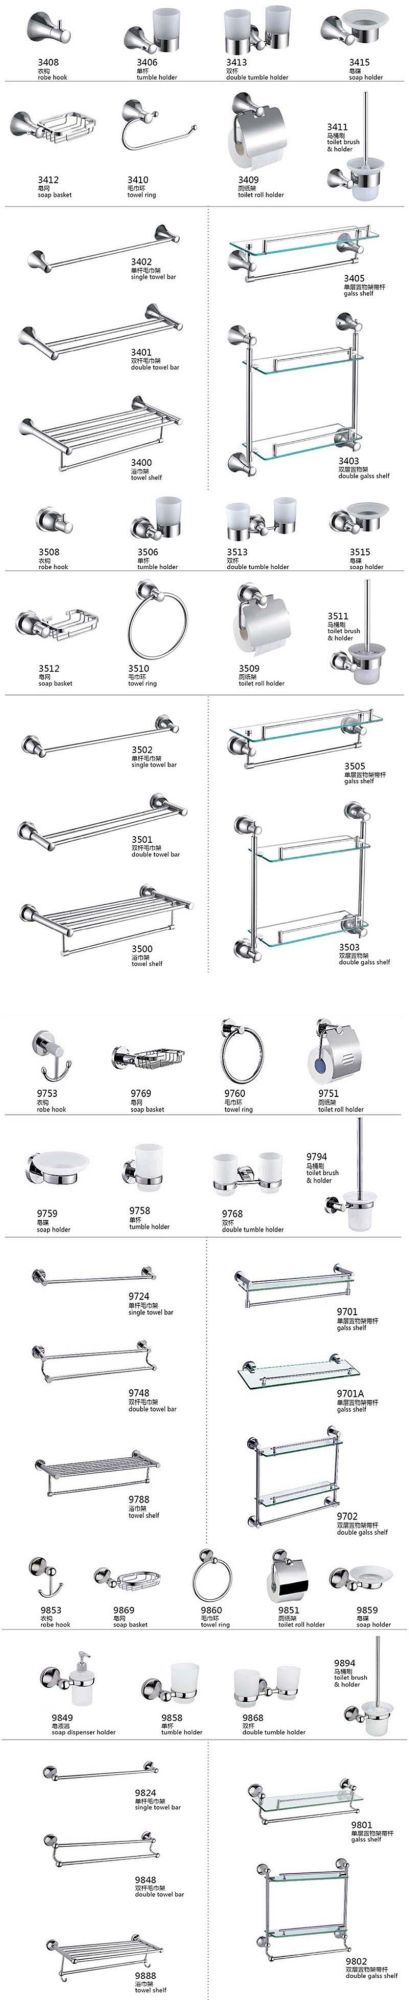 Bathroom Fittings in Bath Hardware Sets/Bathroom Fittings in Bathroom Sets/Bathroom Fittings in Bath Shower&Faucets